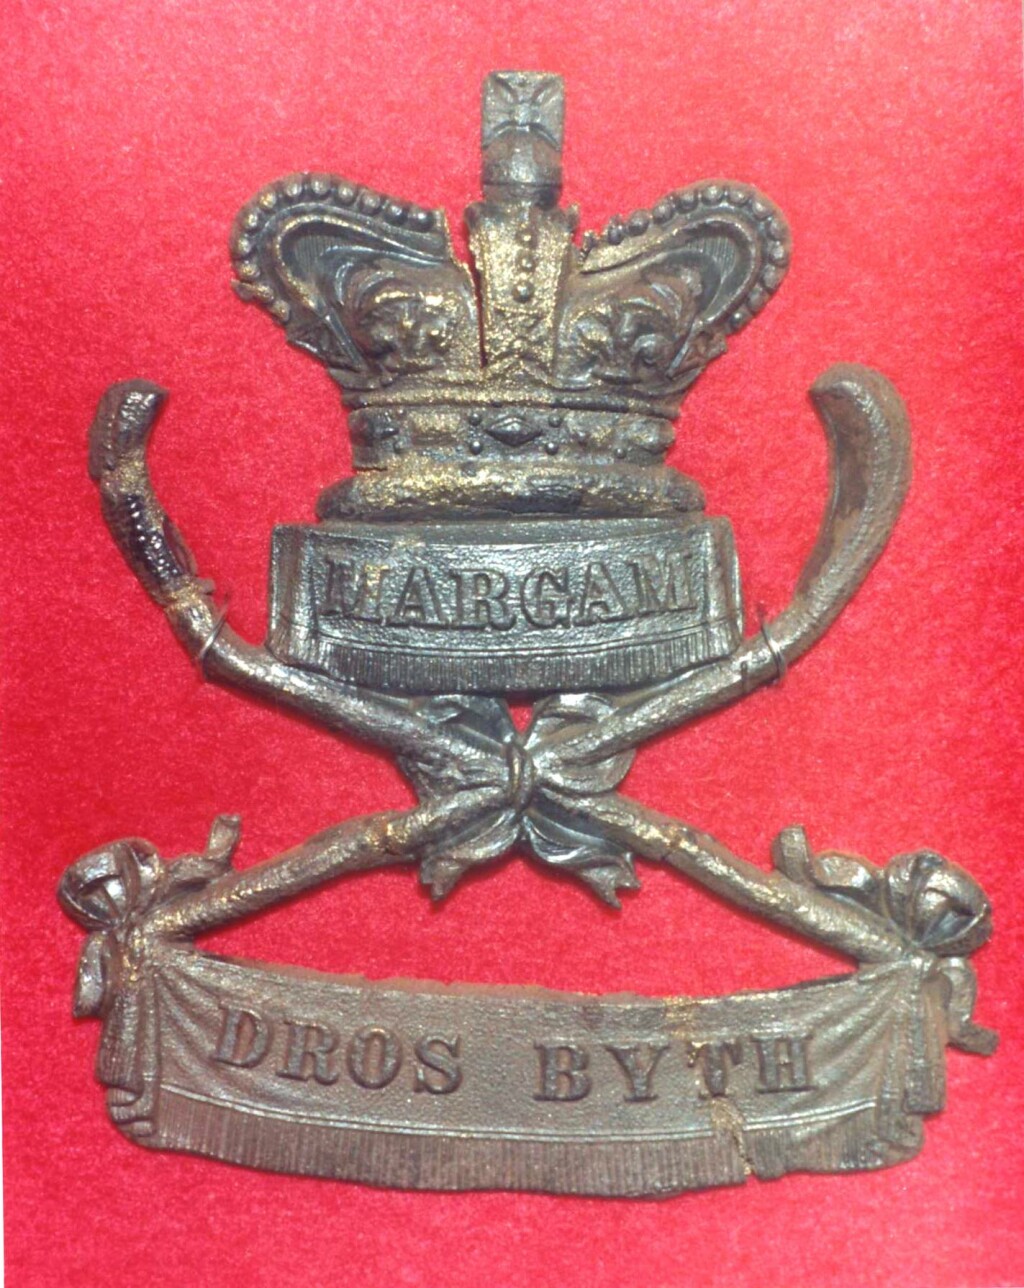 Glamorgan Volunteers Military Badge